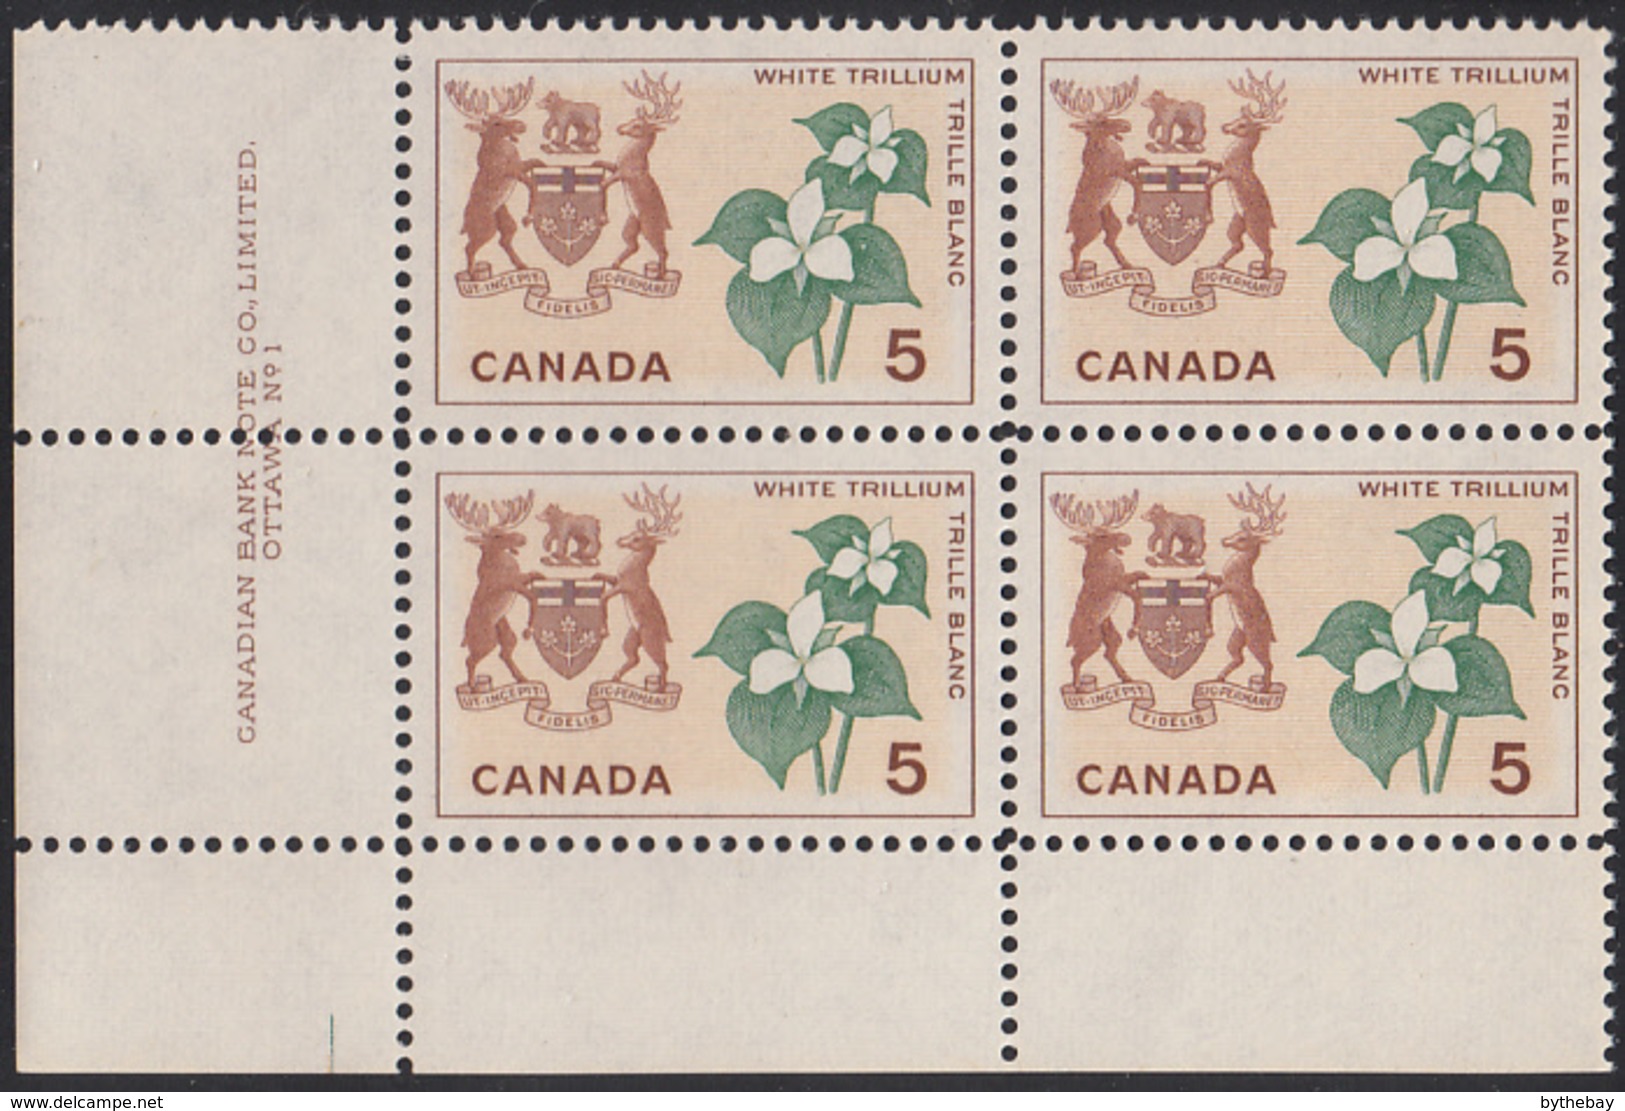 Canada 1964 MNH Sc #418 5c White Trillium Ontario Plate #1 LL - Números De Planchas & Inscripciones